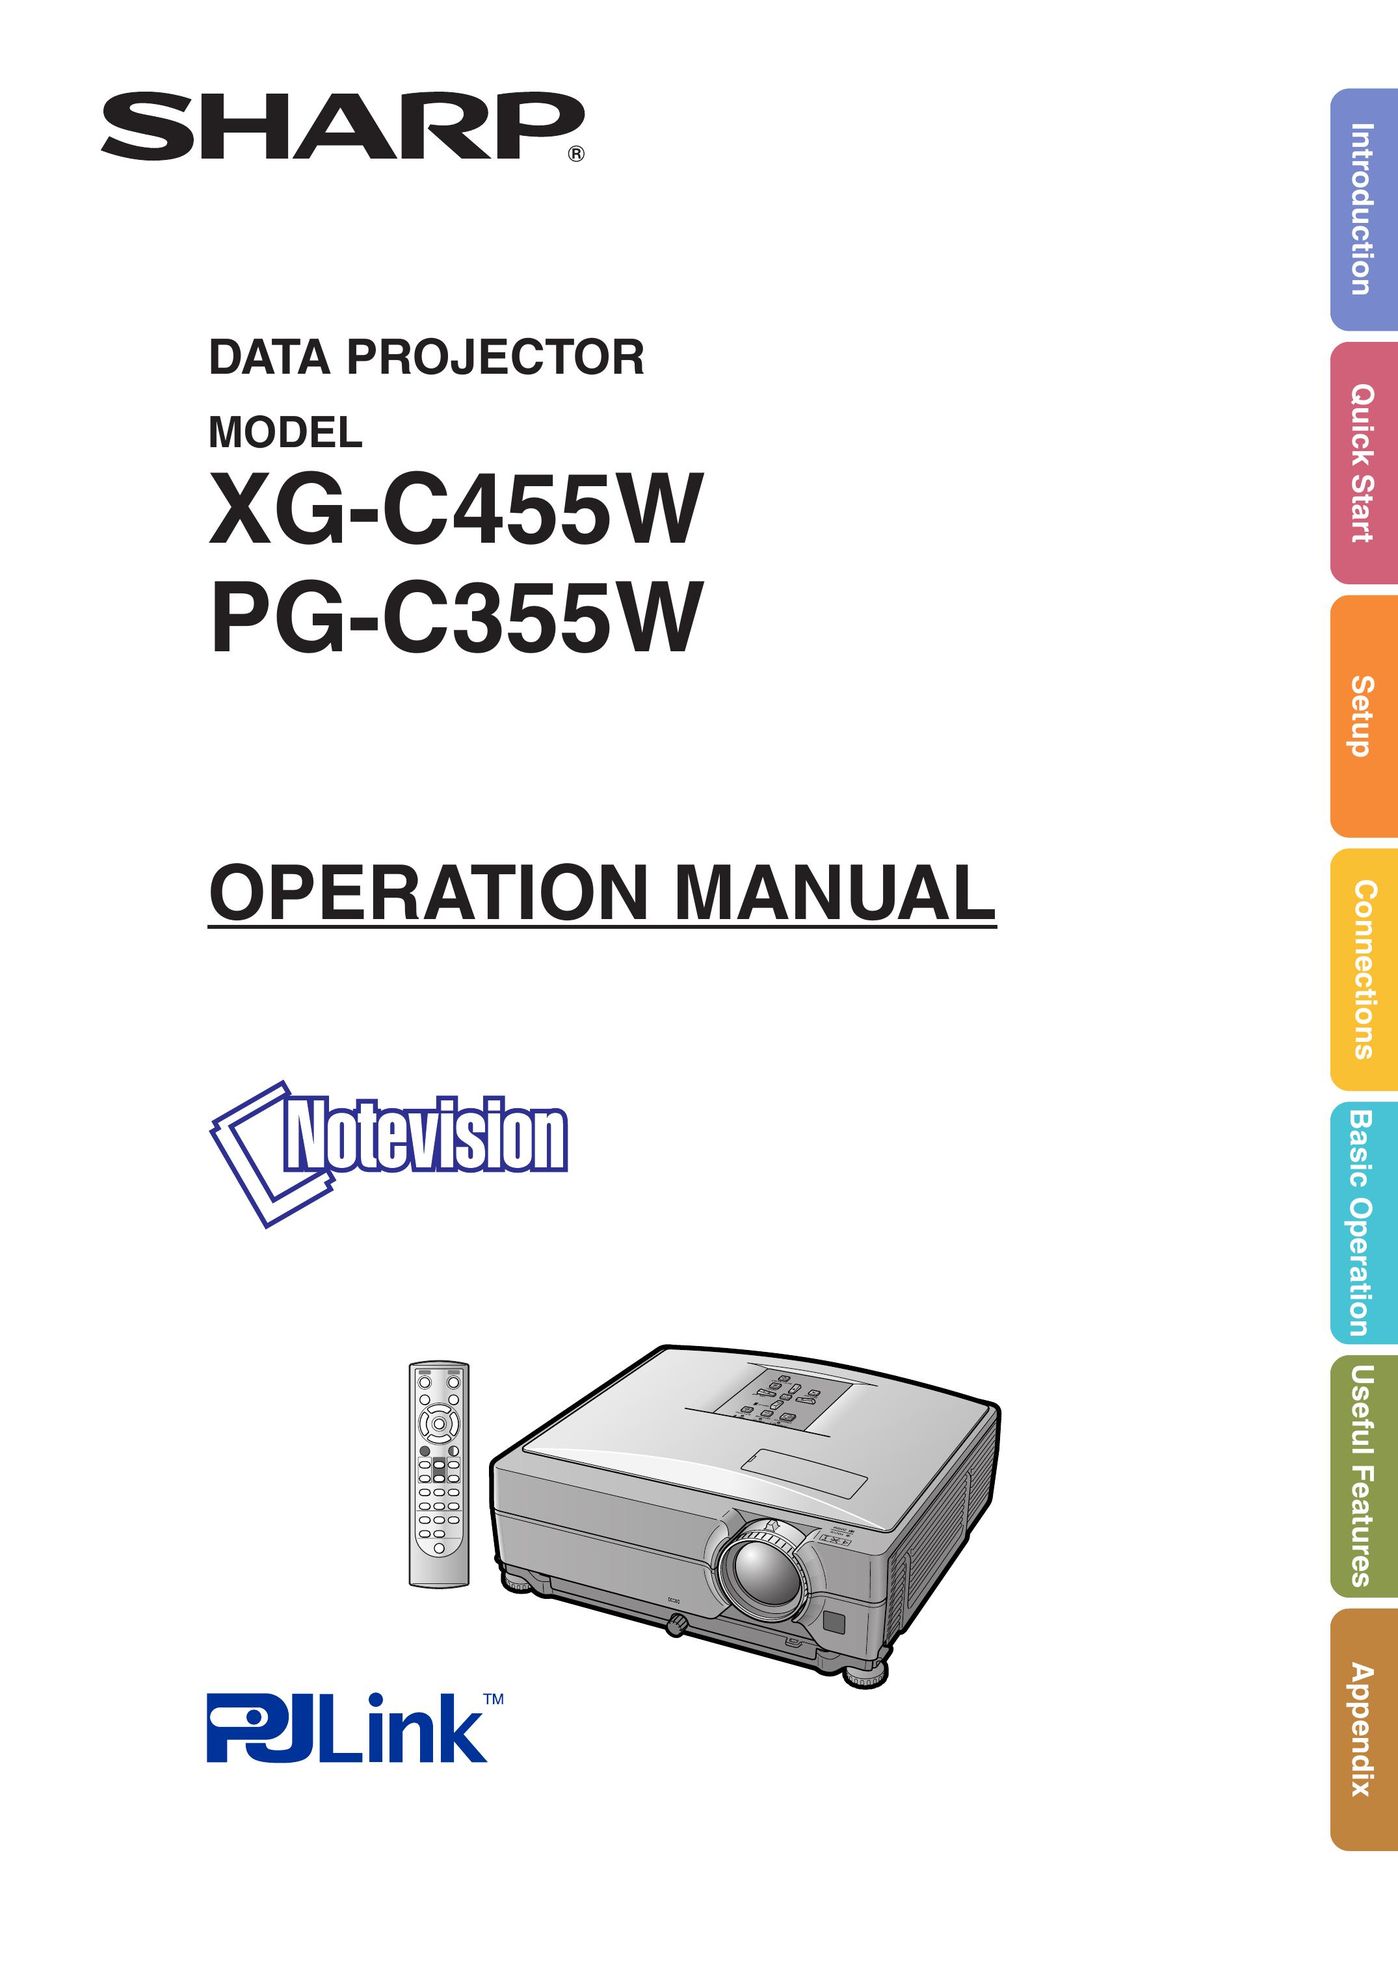 Sharp PG-C355W Projector User Manual